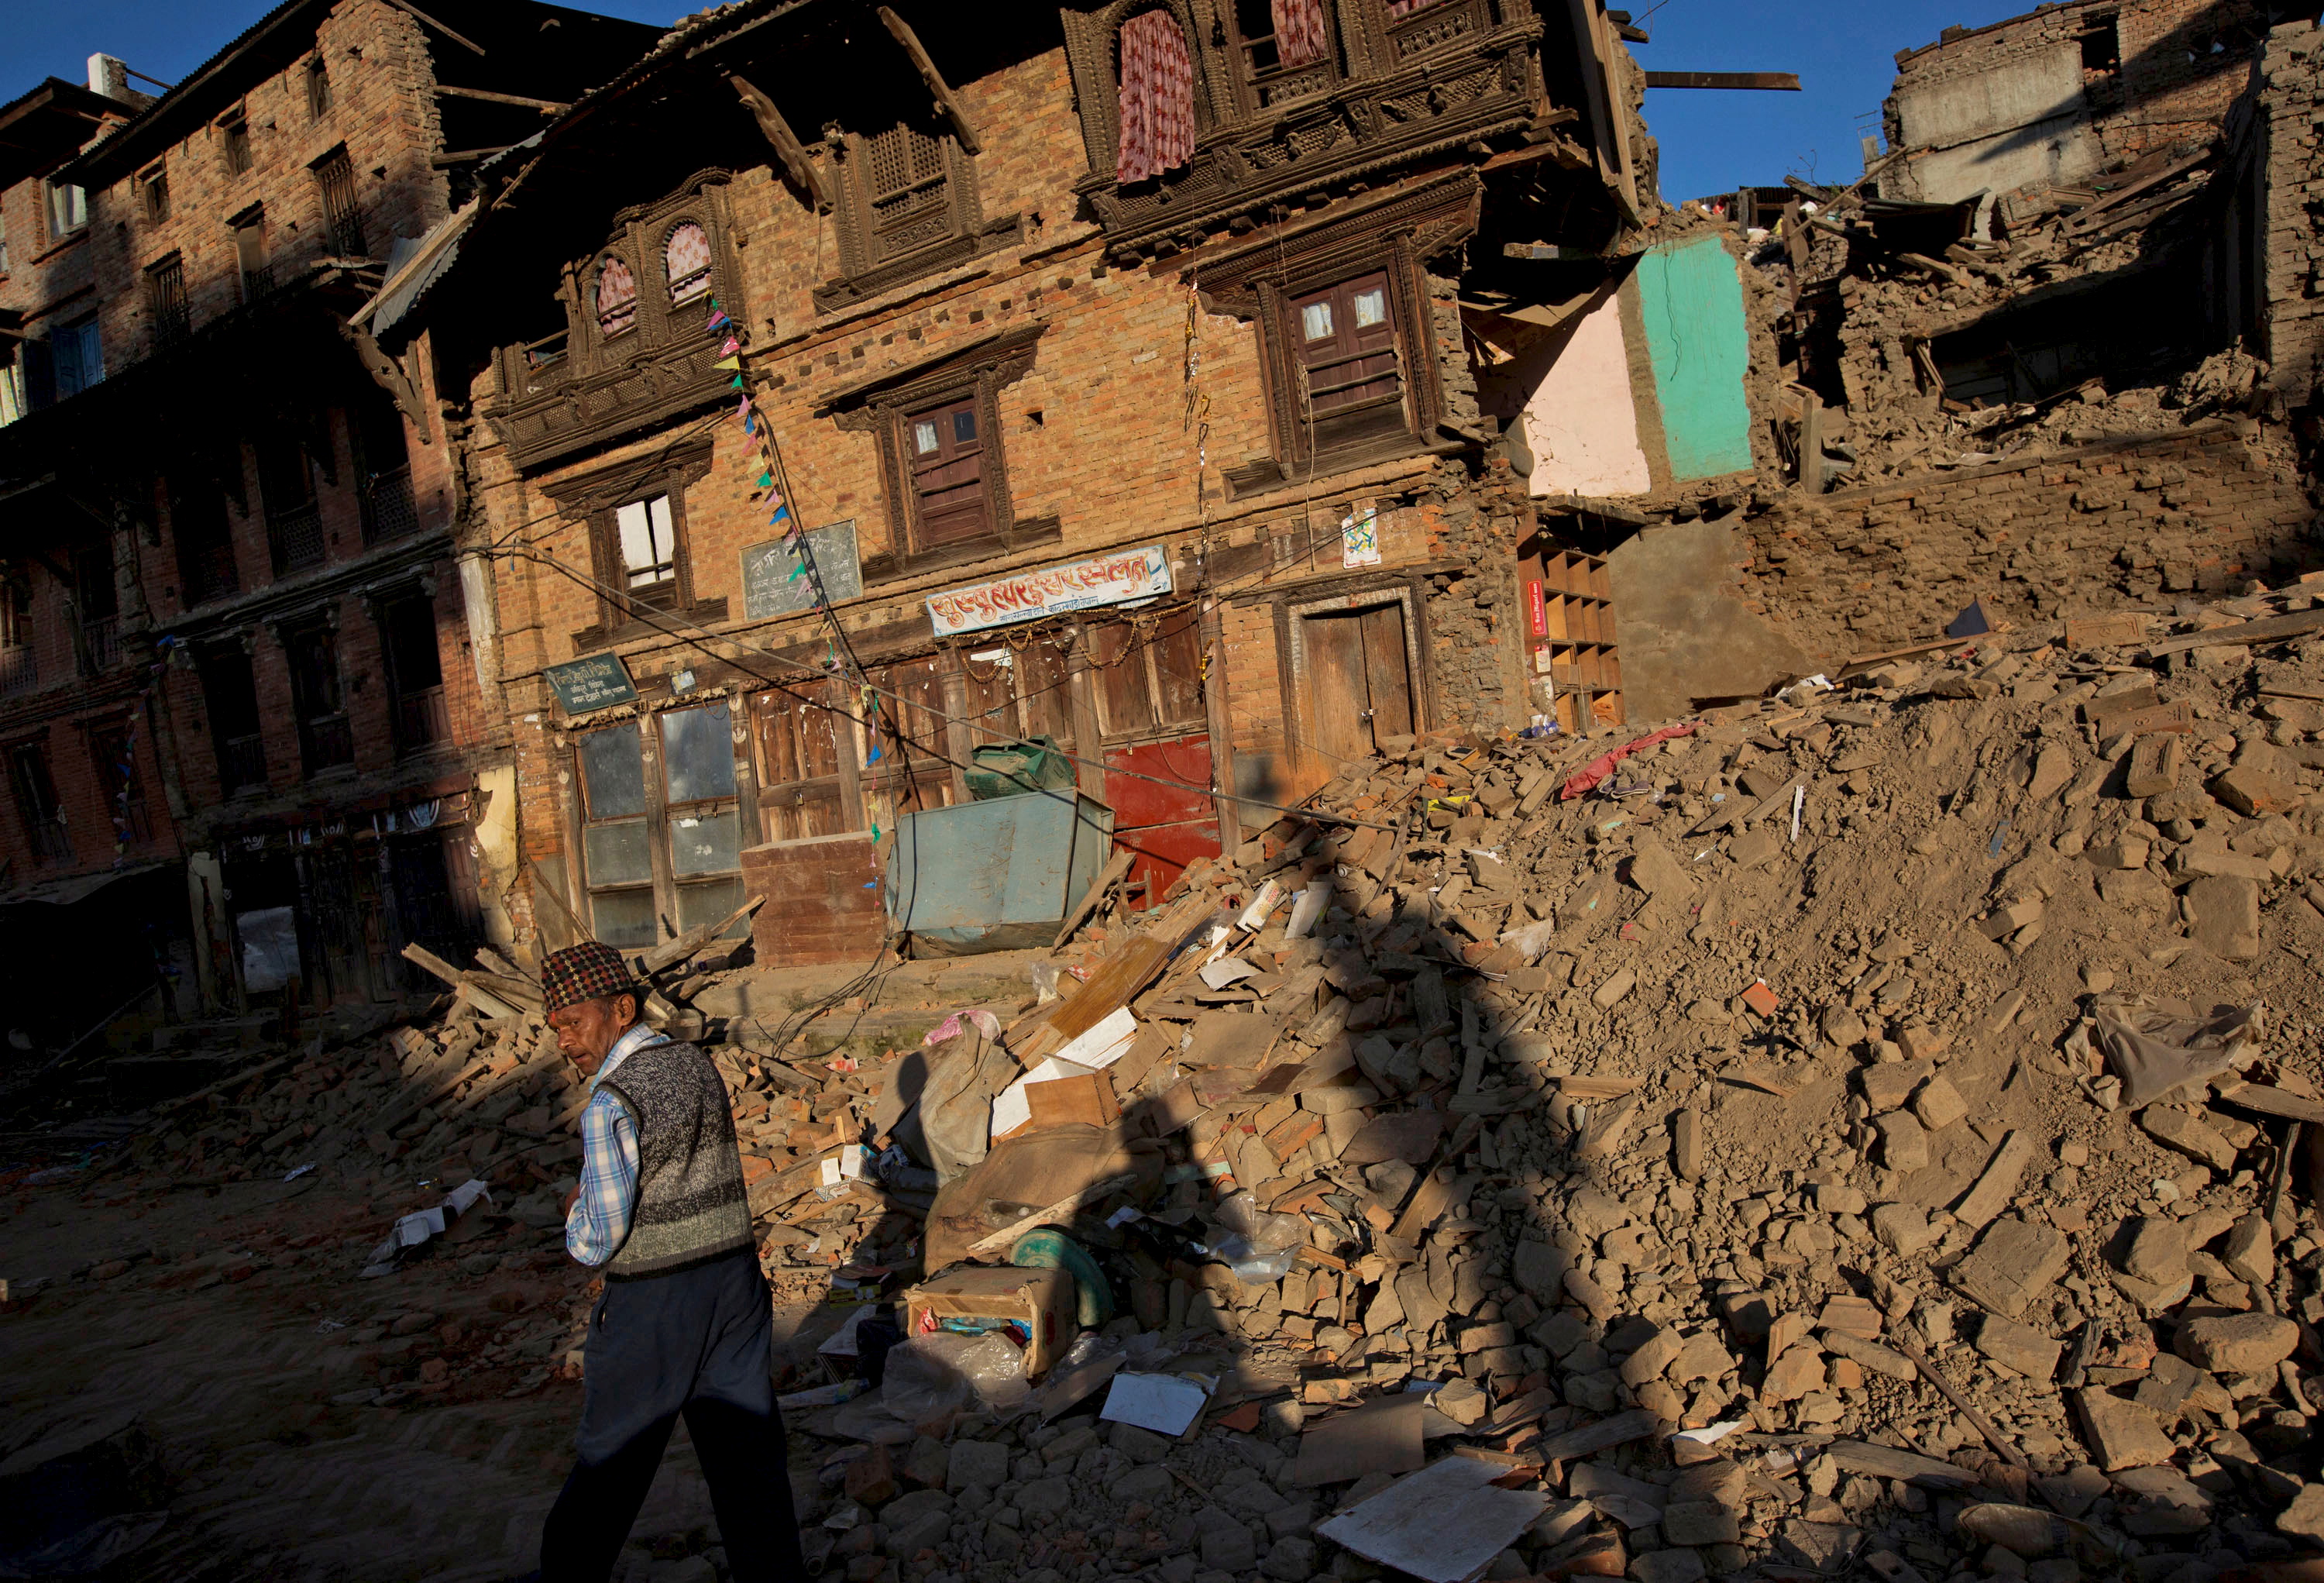 An earthquake victim walks along a street near collapsed houses in Sankhu, on the outskirts of Kathmandu